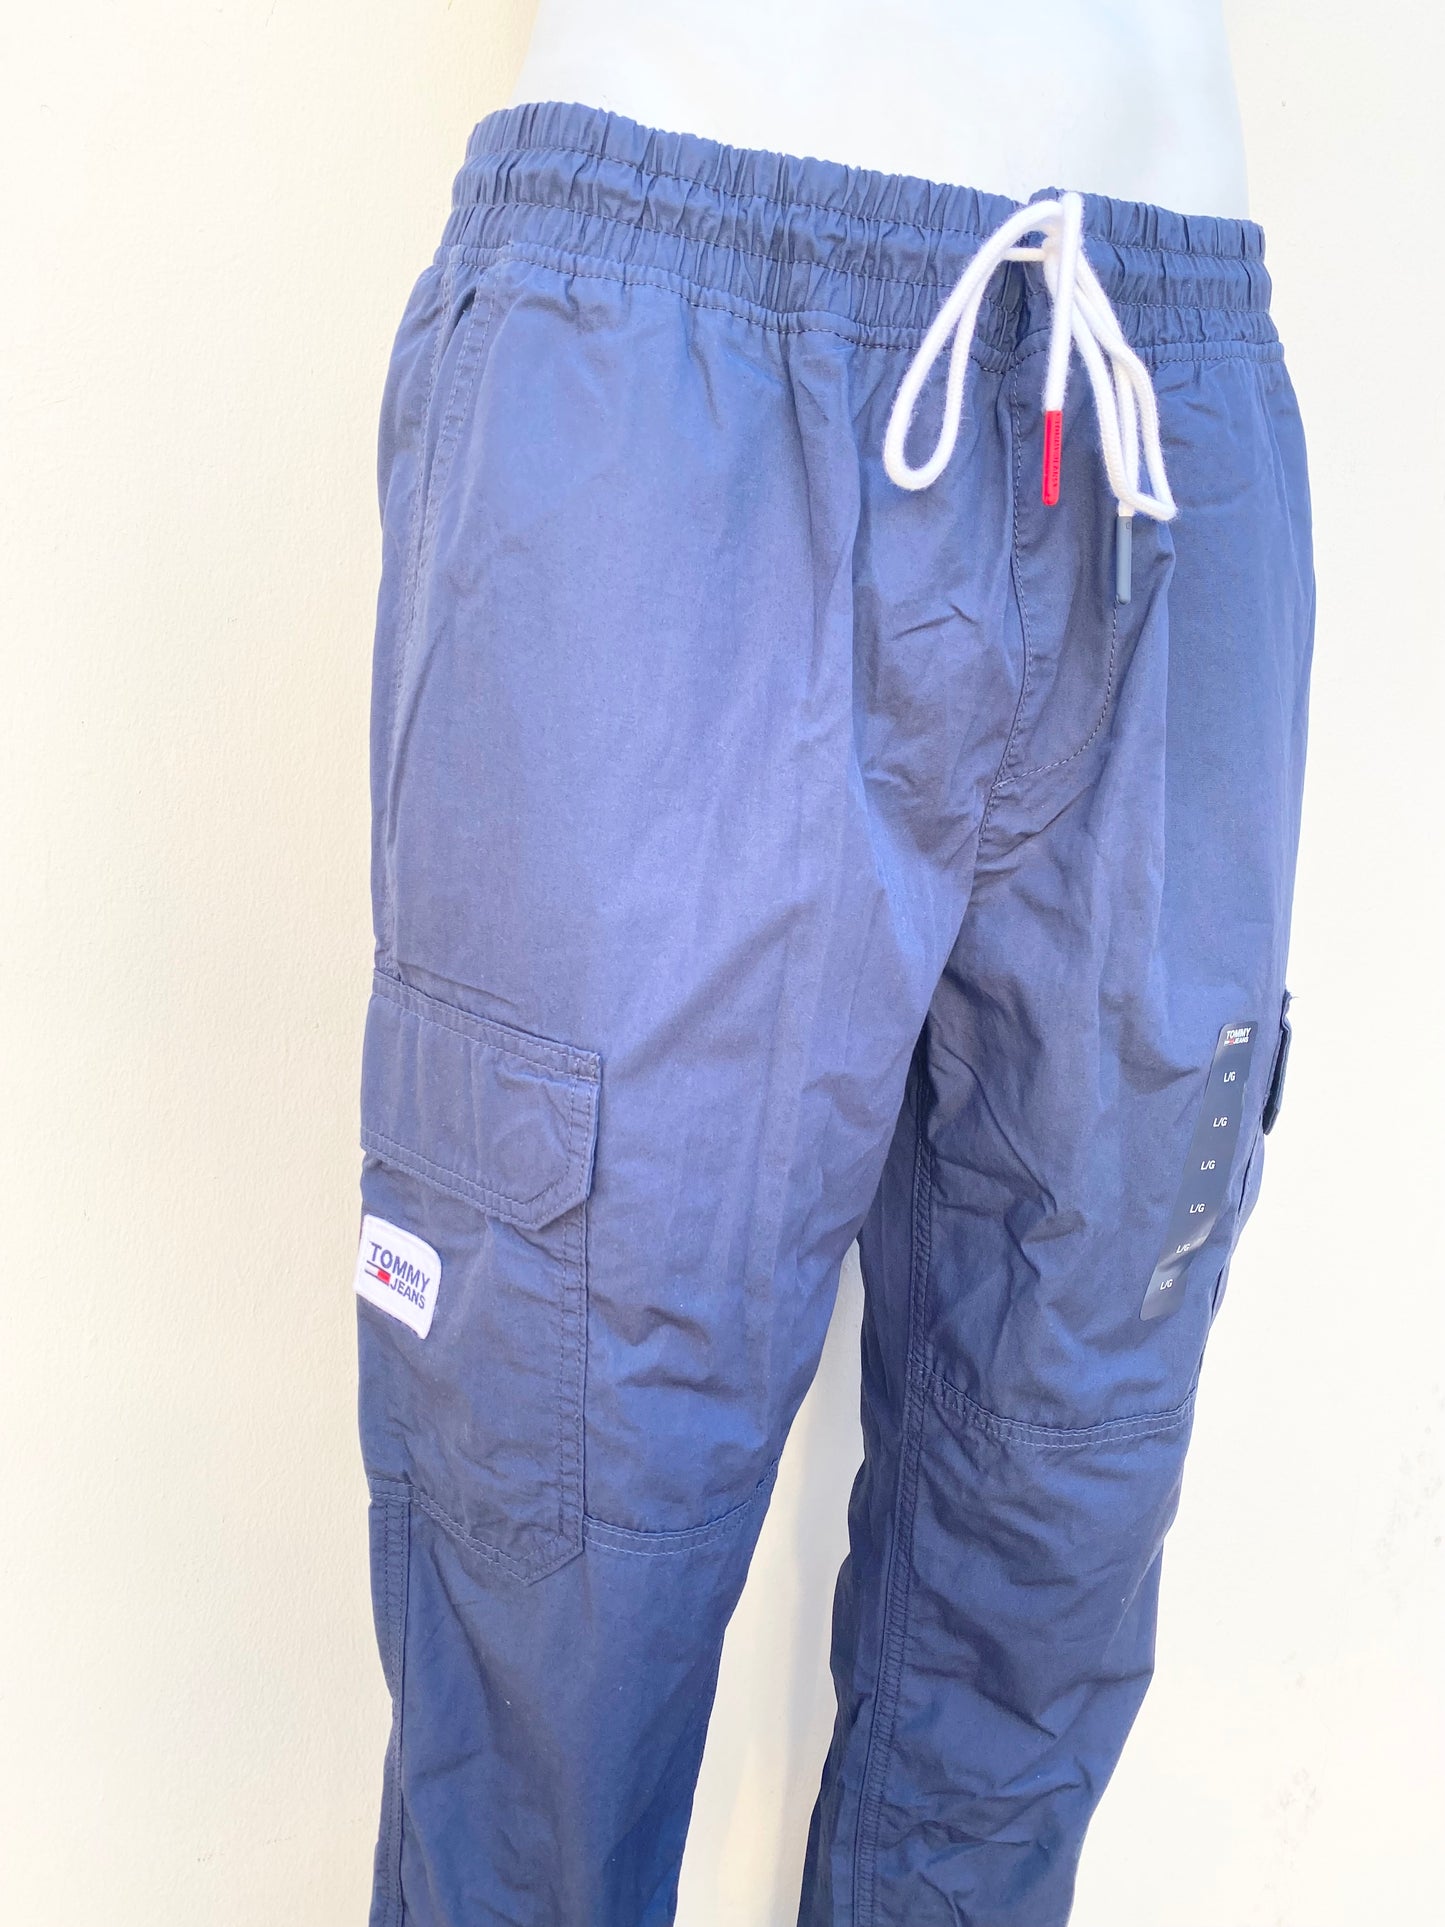 Jogger pantalón Tommy Hilfiger original azul con lazos blanco.